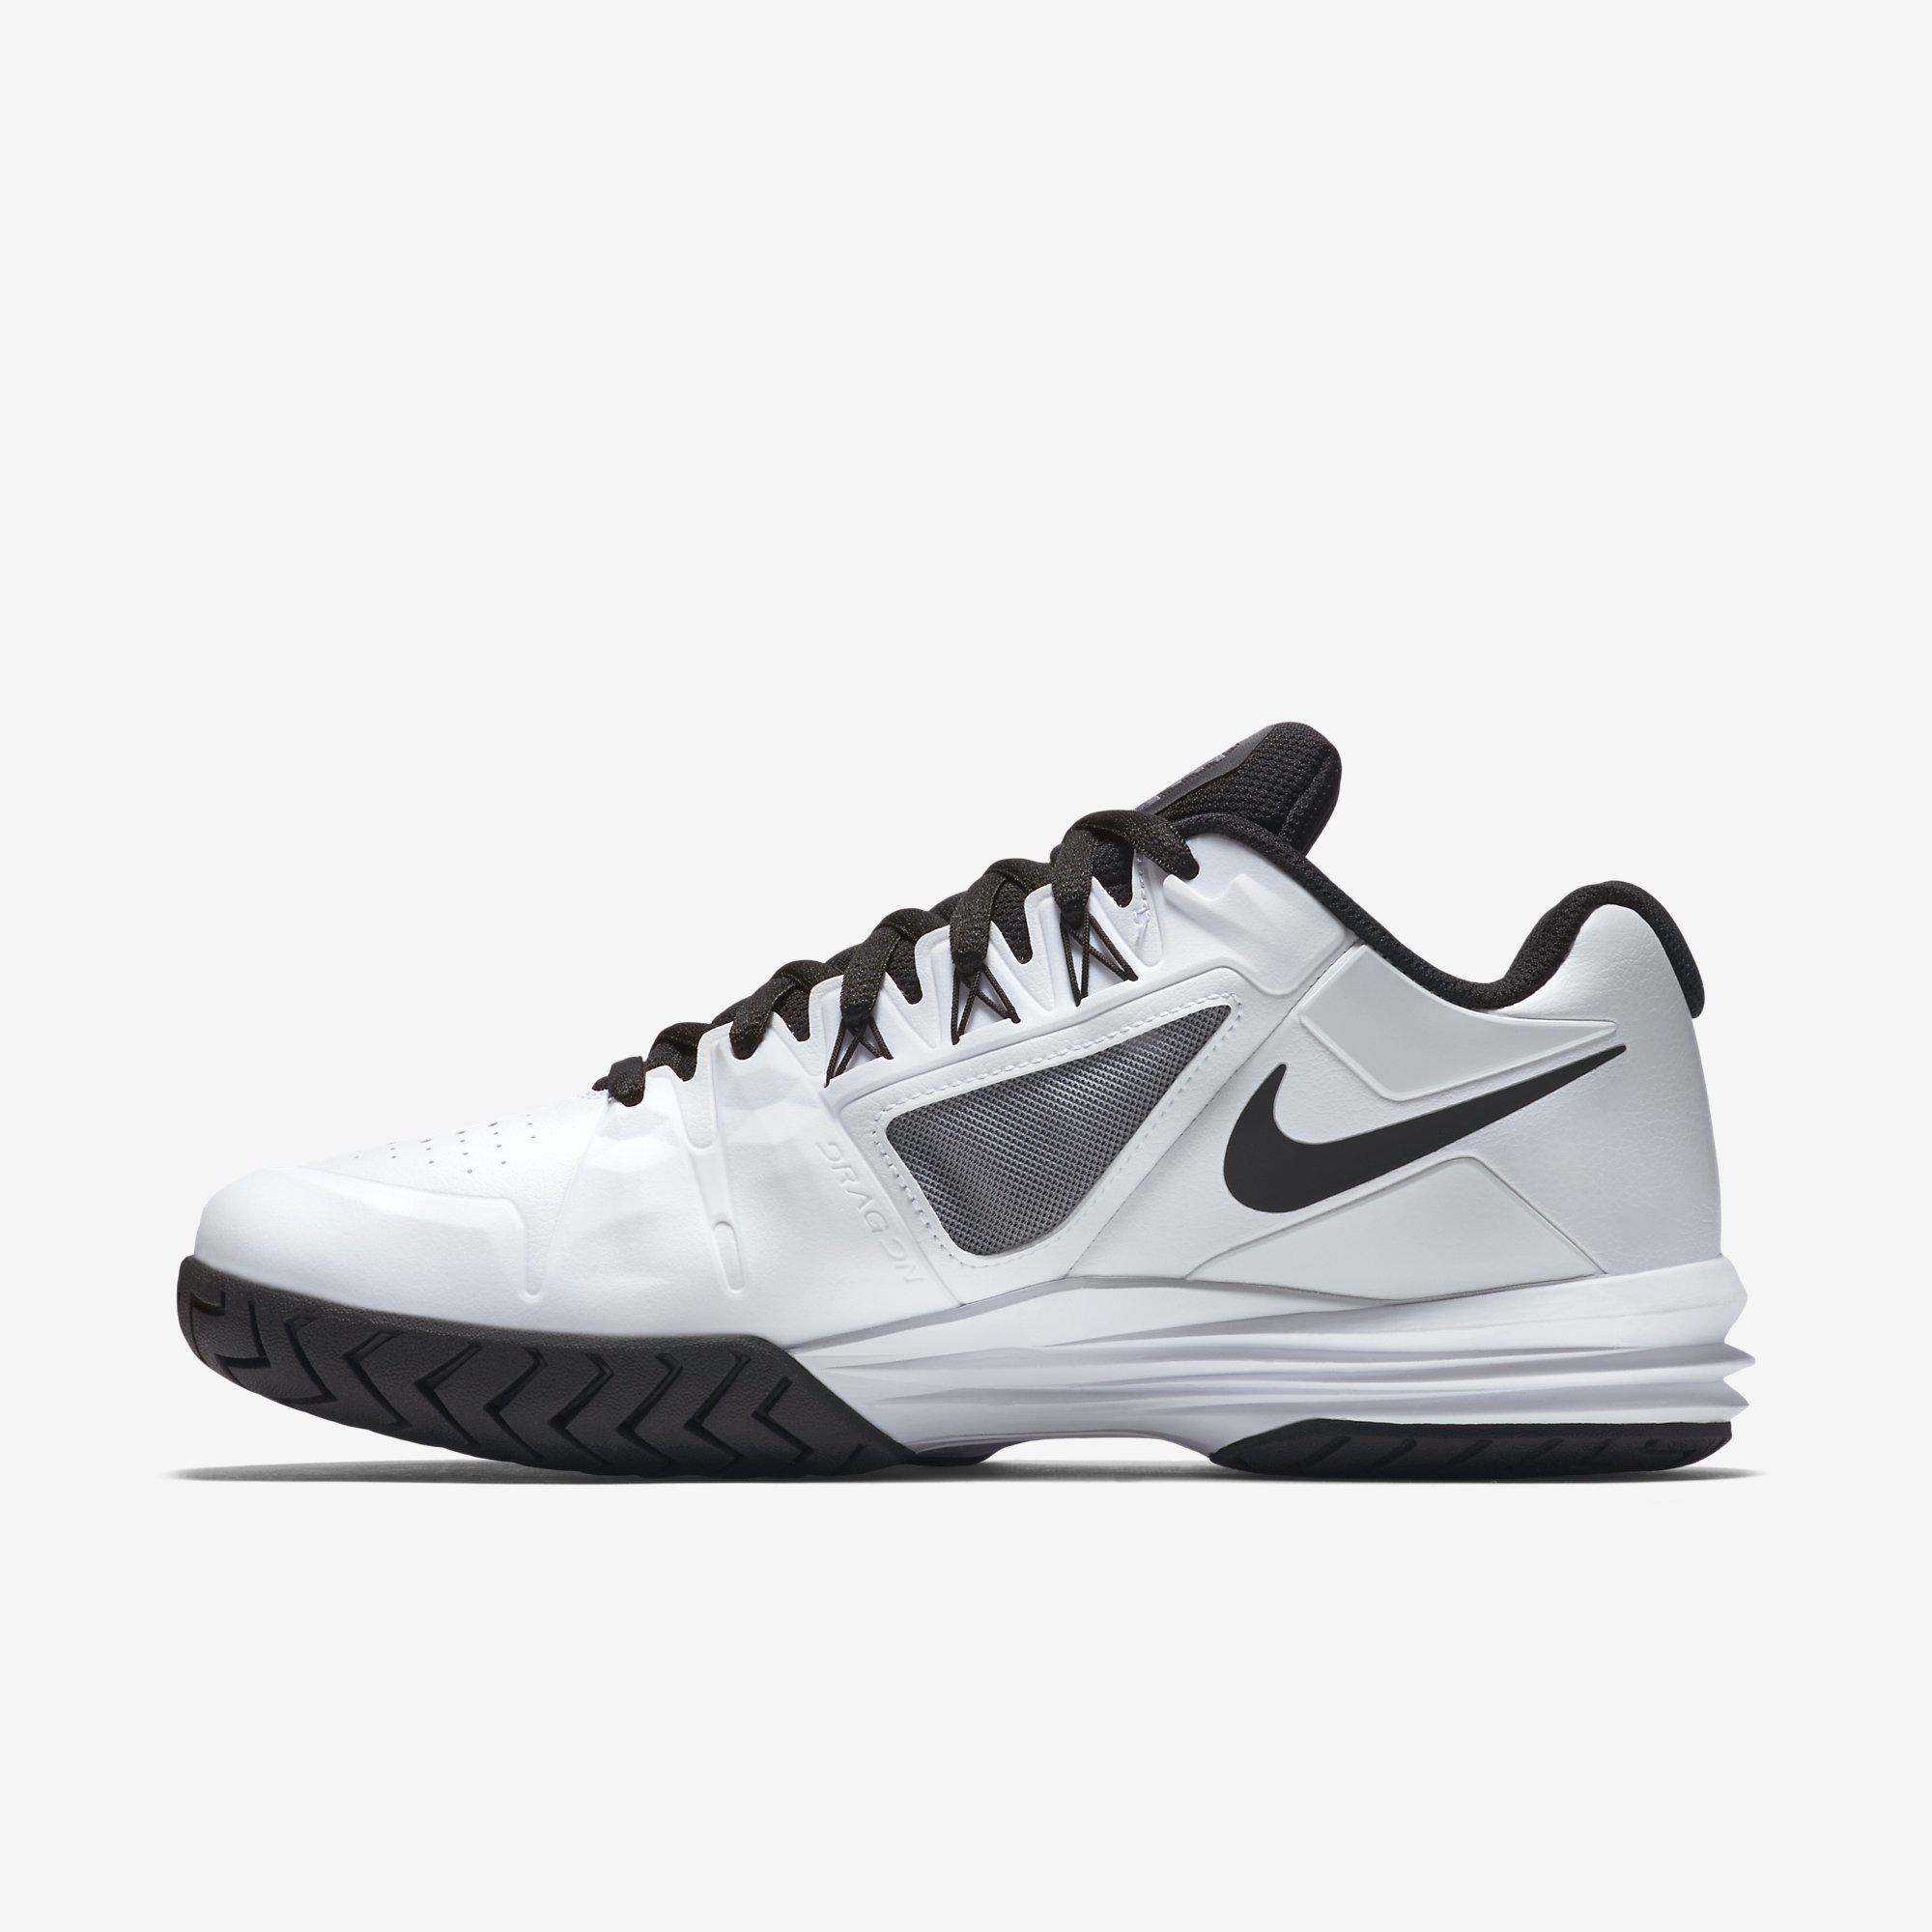 Nike Mens Lunar Ballistec 1.5 Tennis Shoes - White/Black - Tennisnuts.com